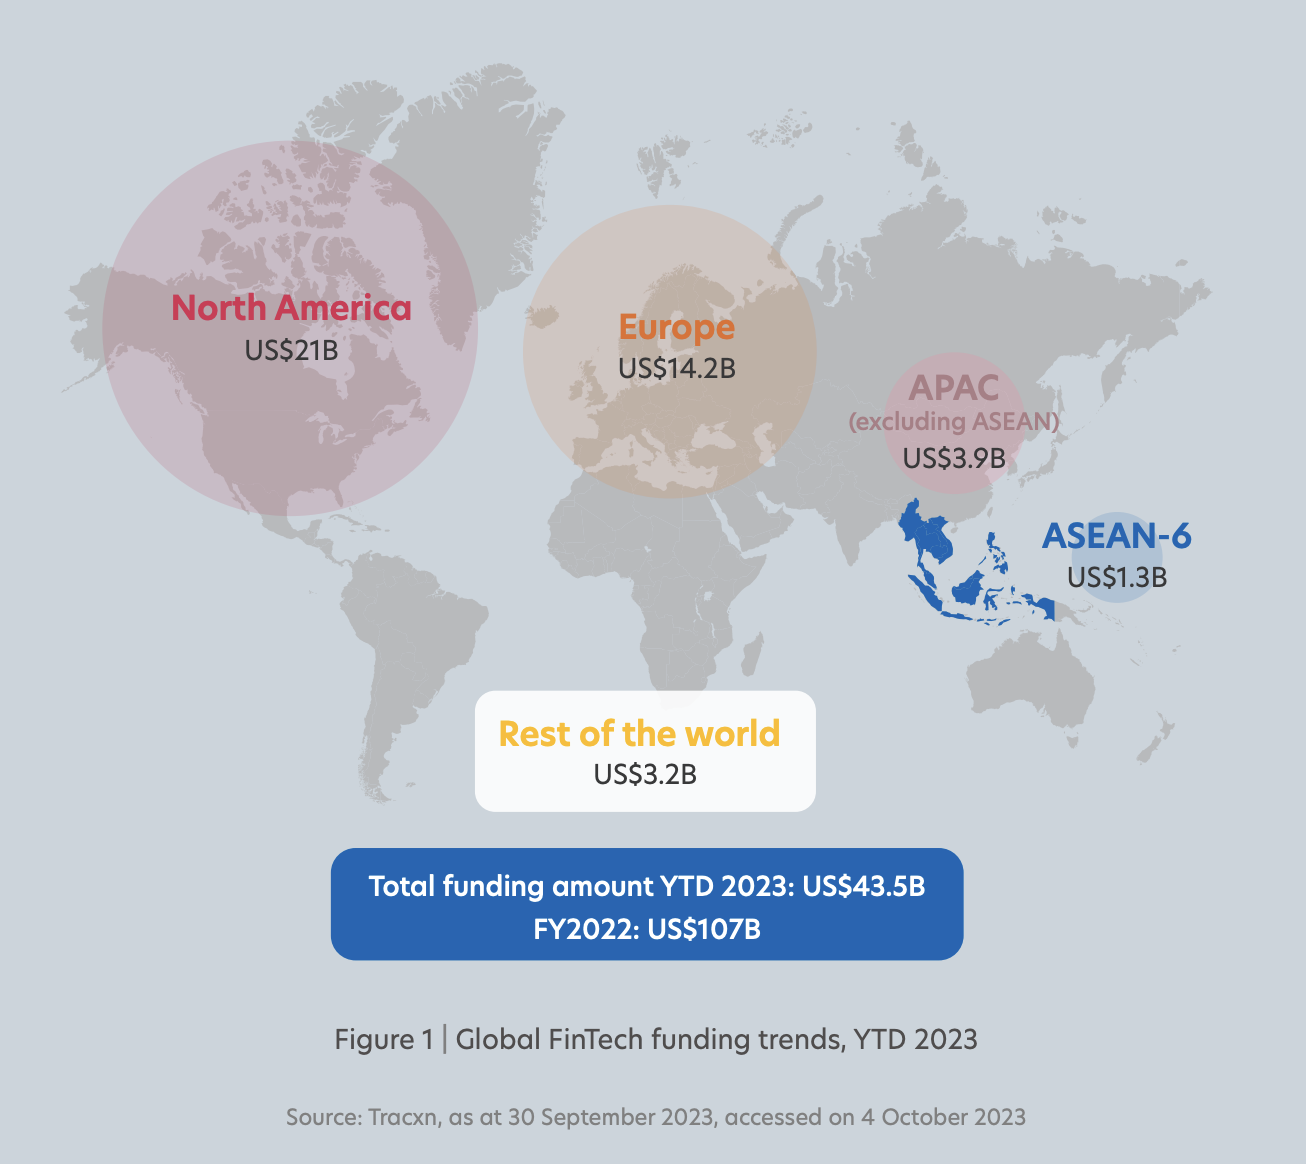 Globalni trendi financiranja Finrech, YTD 2023, Vir: Fintech in ASEAN 2023: Seeding the Green Transition, UOB, PwC Singapur in Singapore Fintech Association (SFA), november 2023